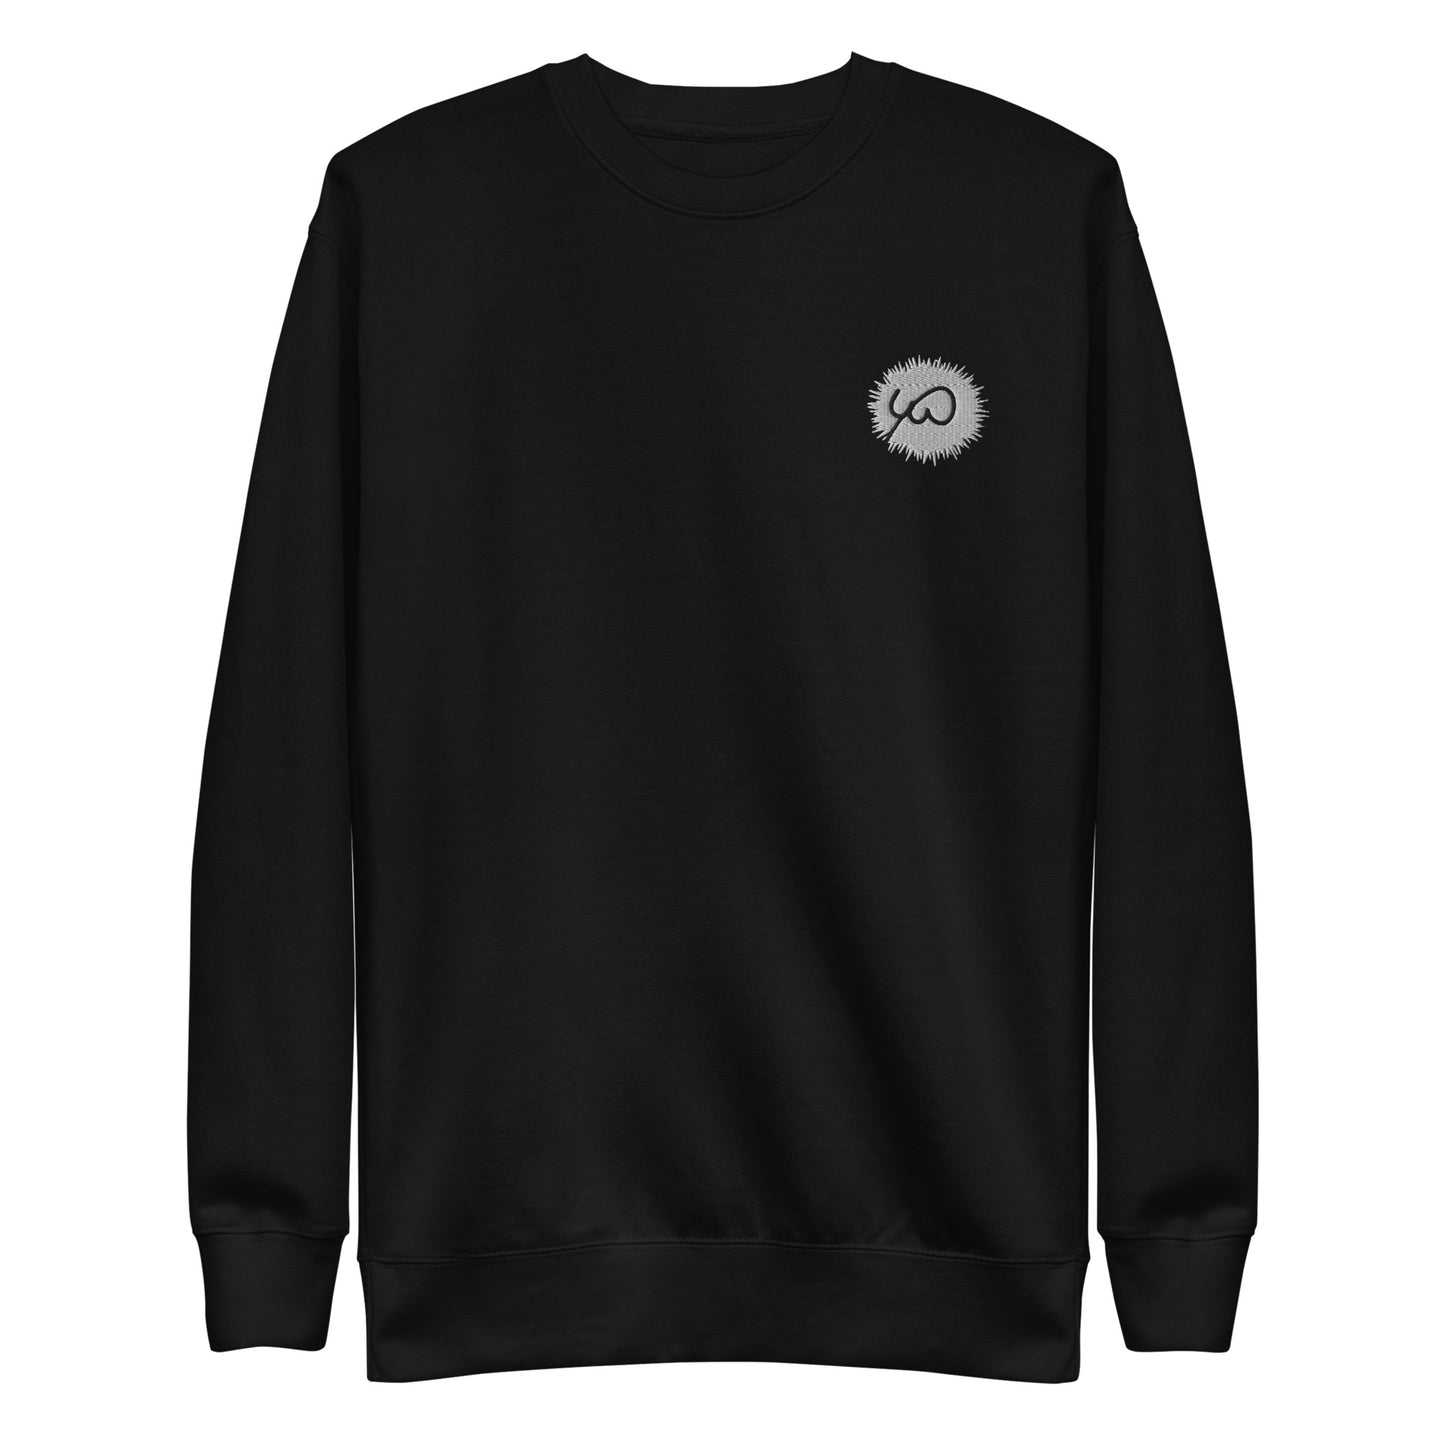 Black Unisex Premium Sweatshirt -Front design with Black and White Embroidery of Uniwari Logo